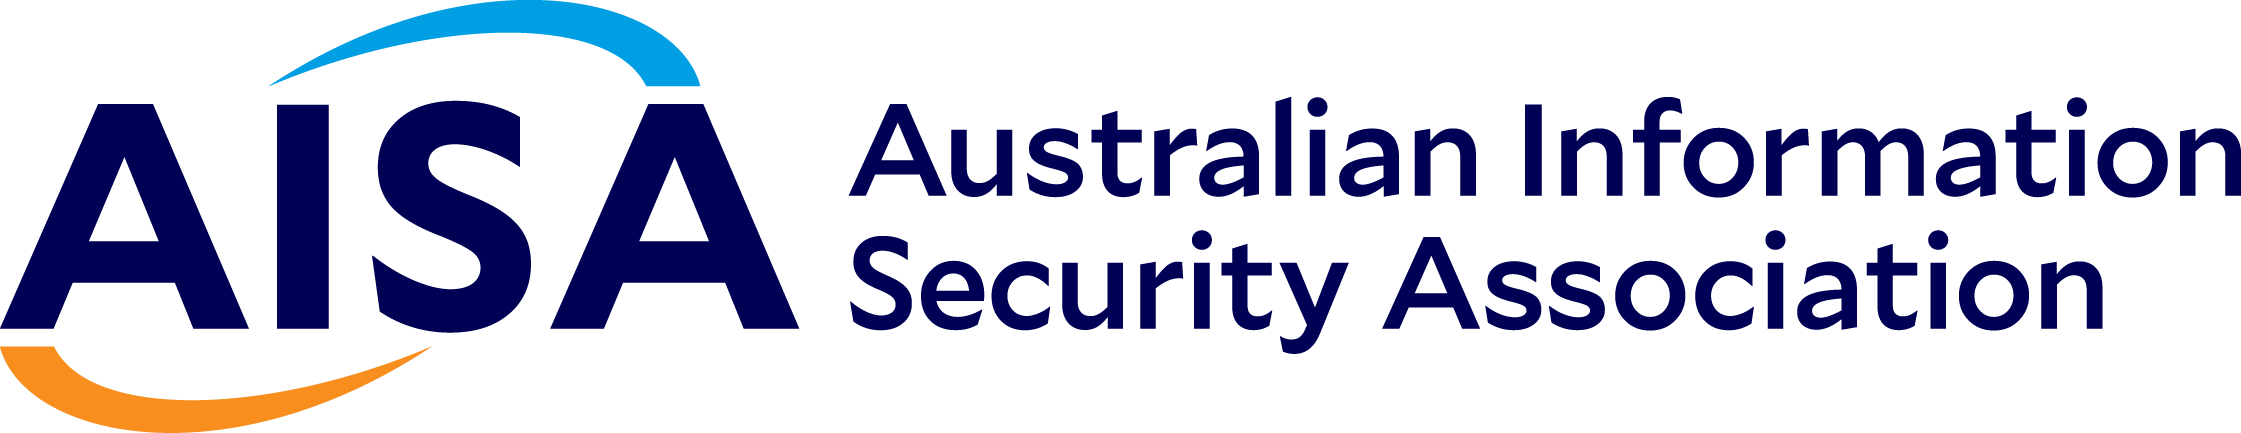 AISA (Australian Information Security Association) のロゴ